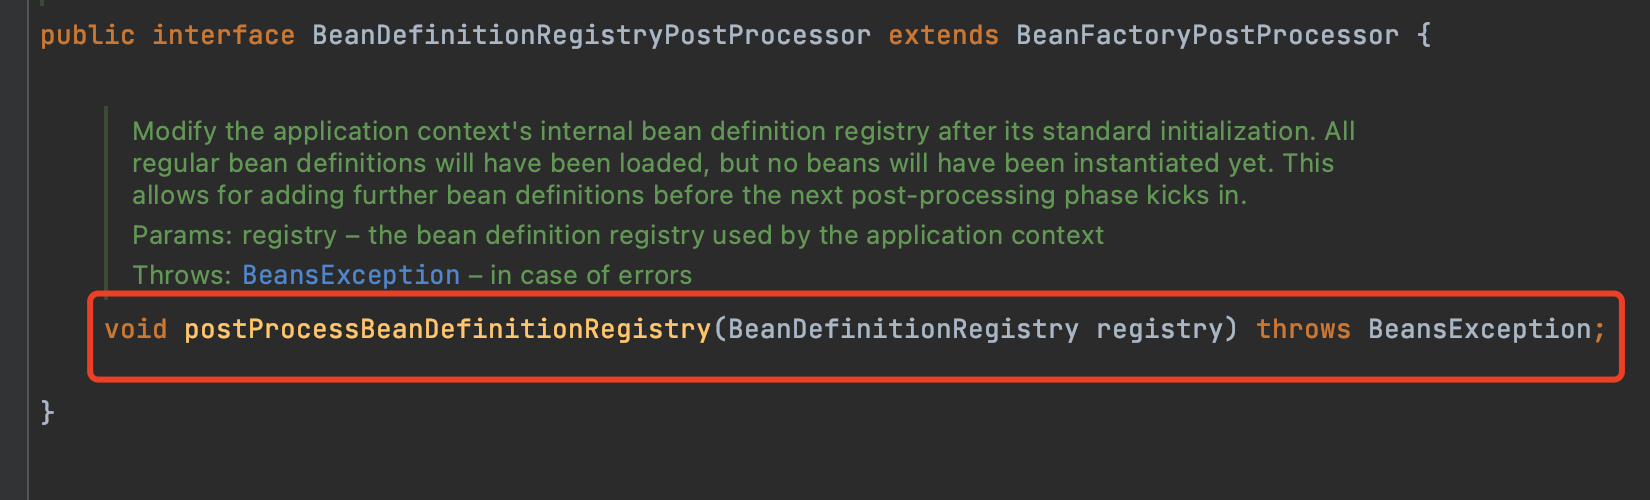 BeanDefinitionRegistryPostProcessor